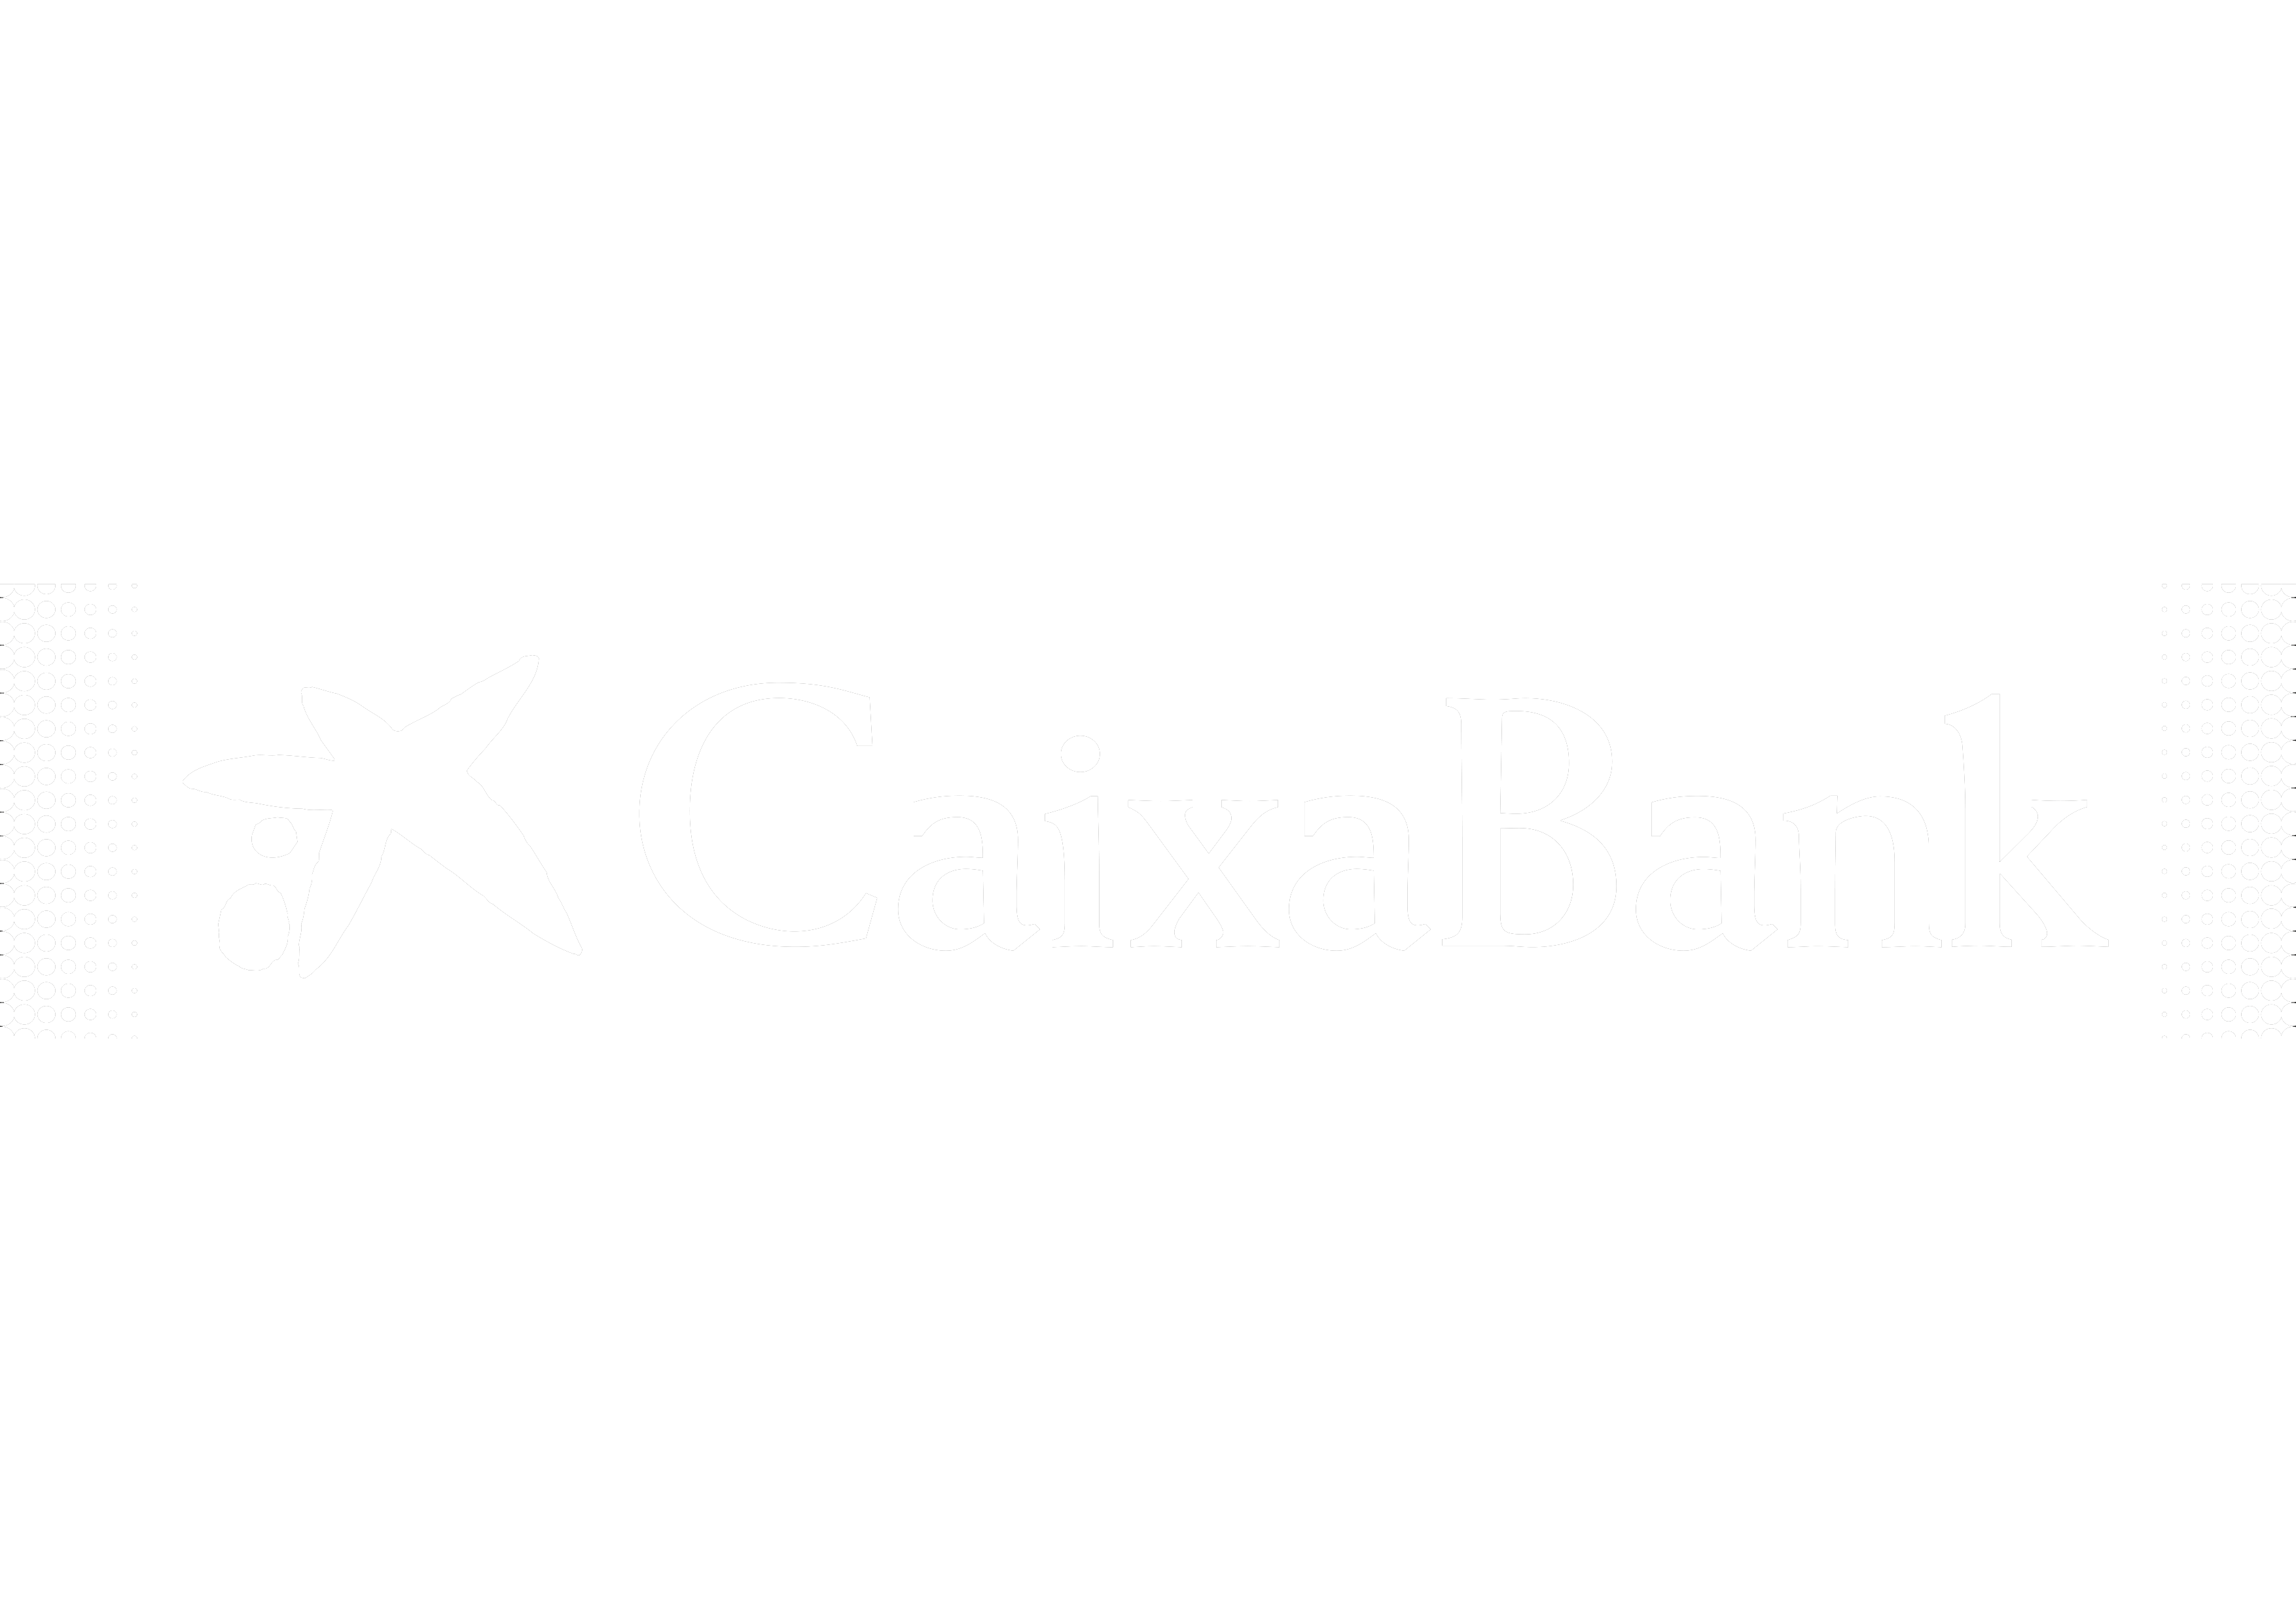 Caixabank 